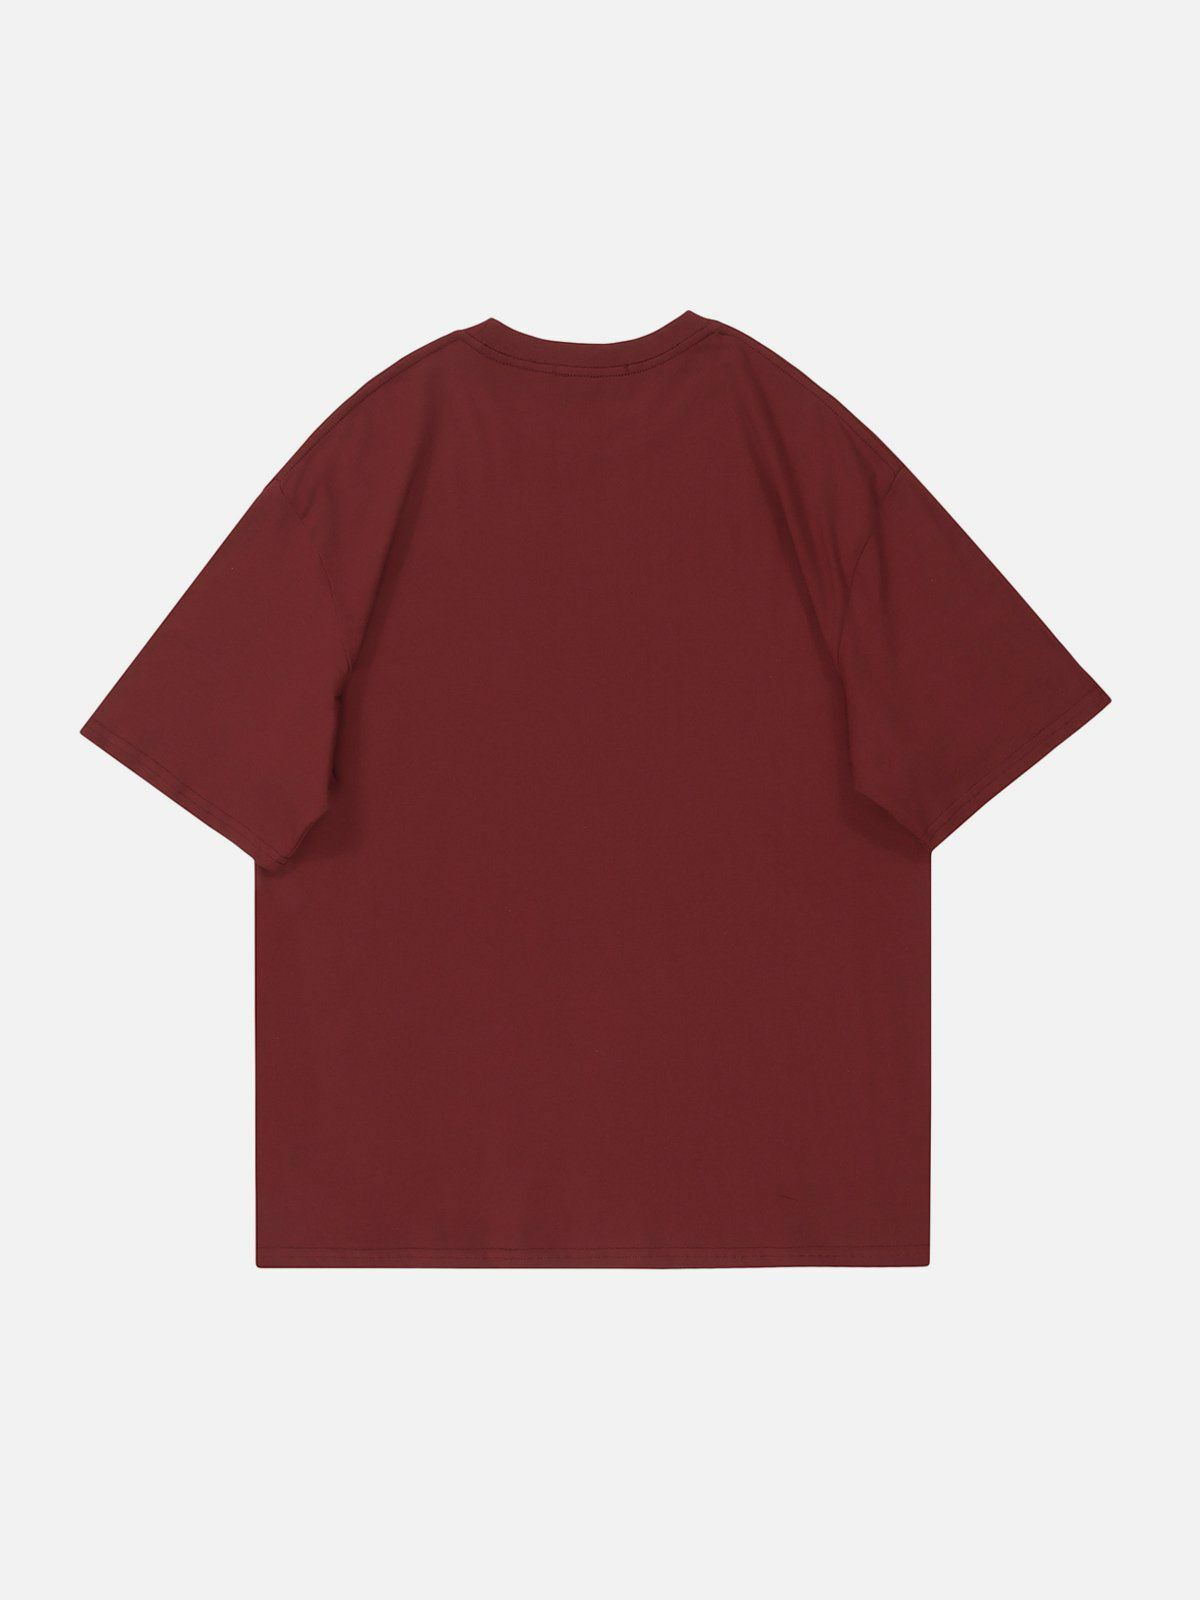 sleek phantom tee retroinspired urban streetwear shirt 8731